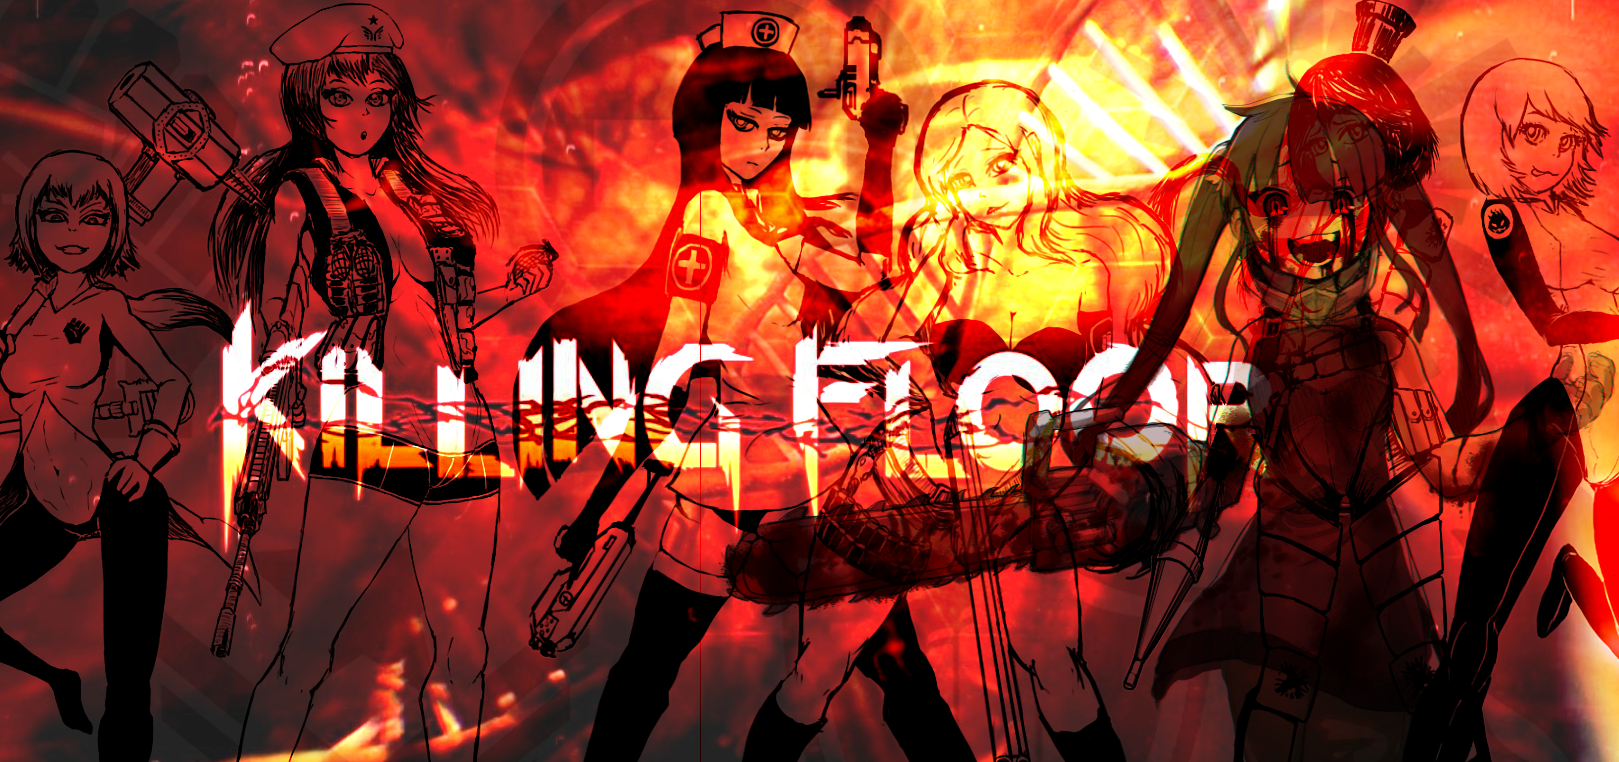 Steam Workshop Killing Floor Anime Collection